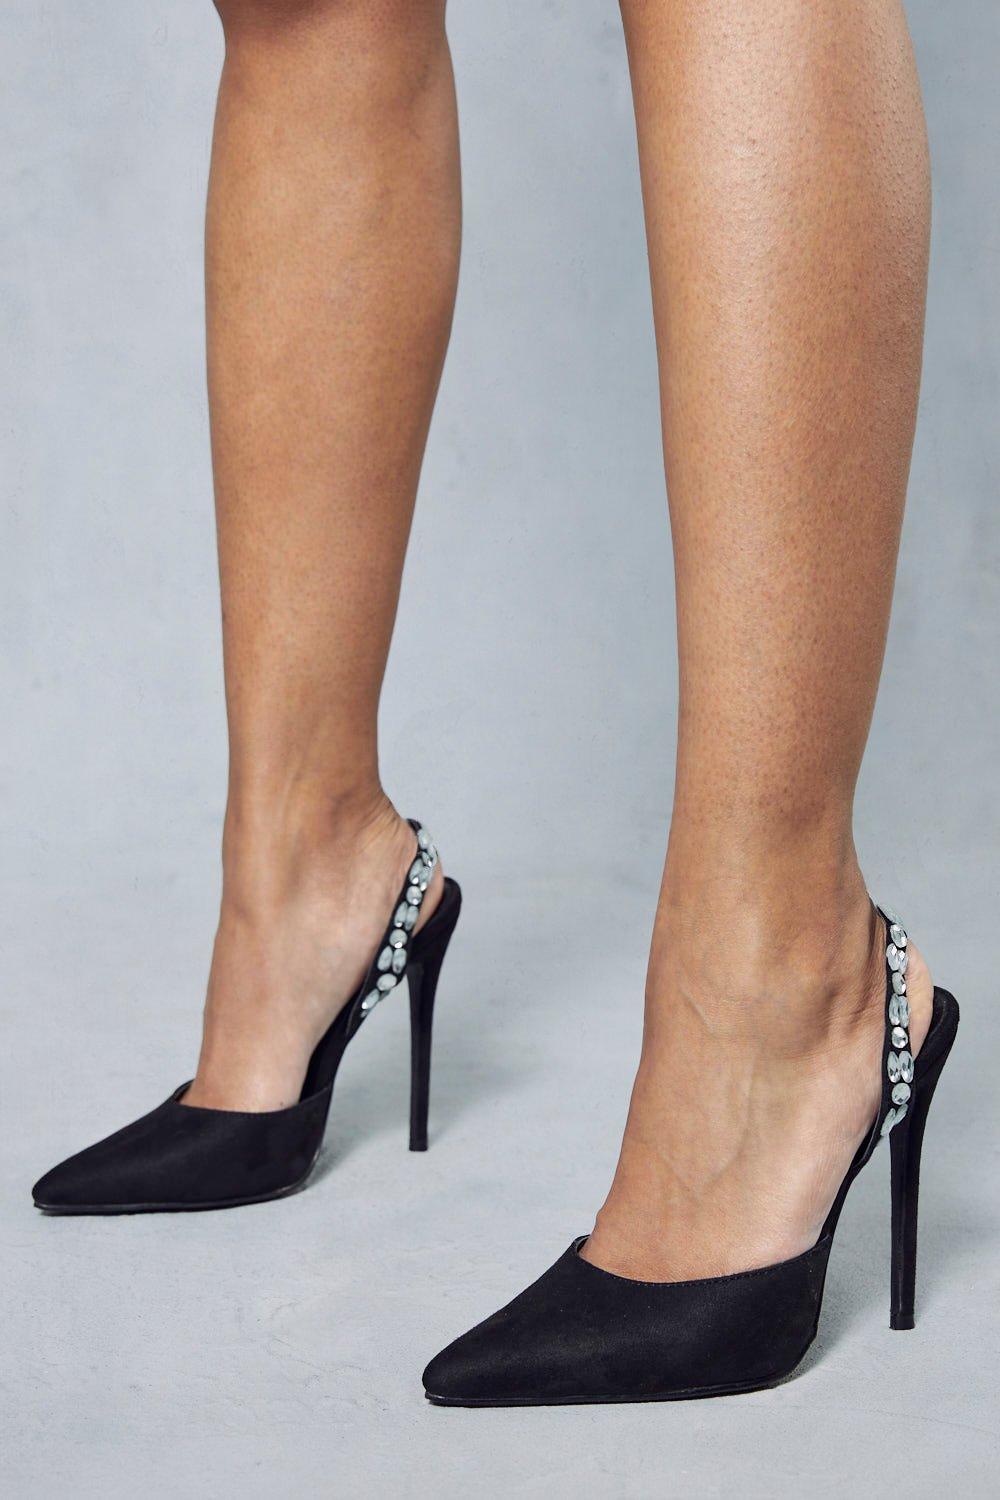 Womens Jewelled Sling Back Heels - black - 4, Black